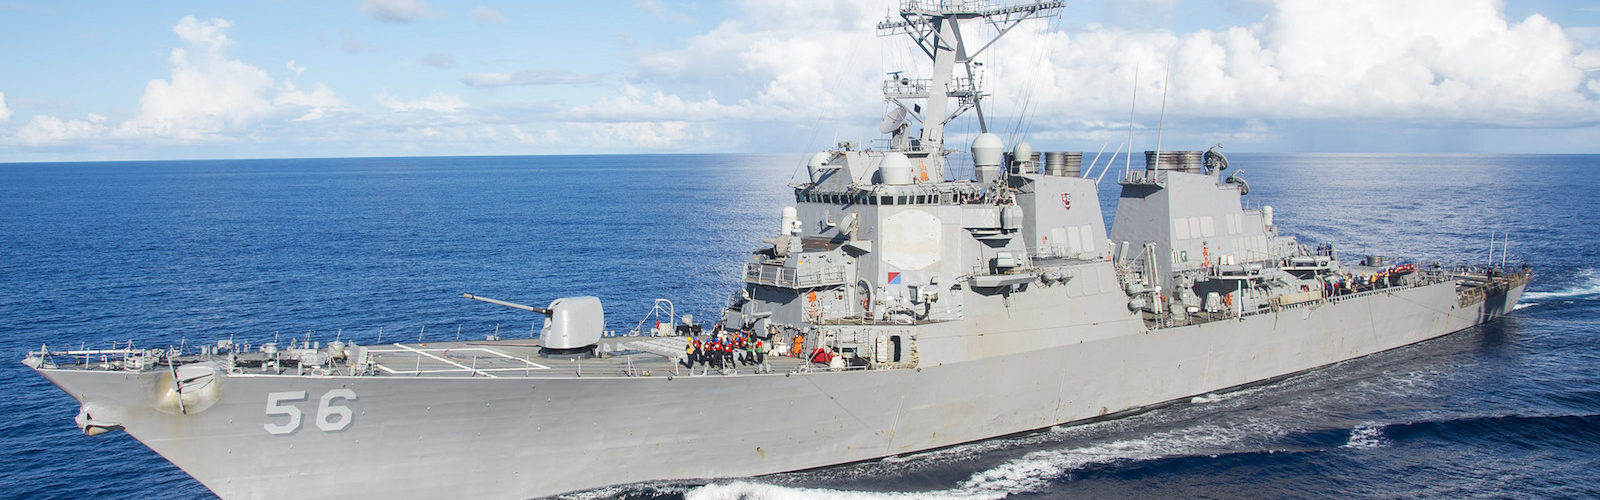 USS-McCain-1600×500